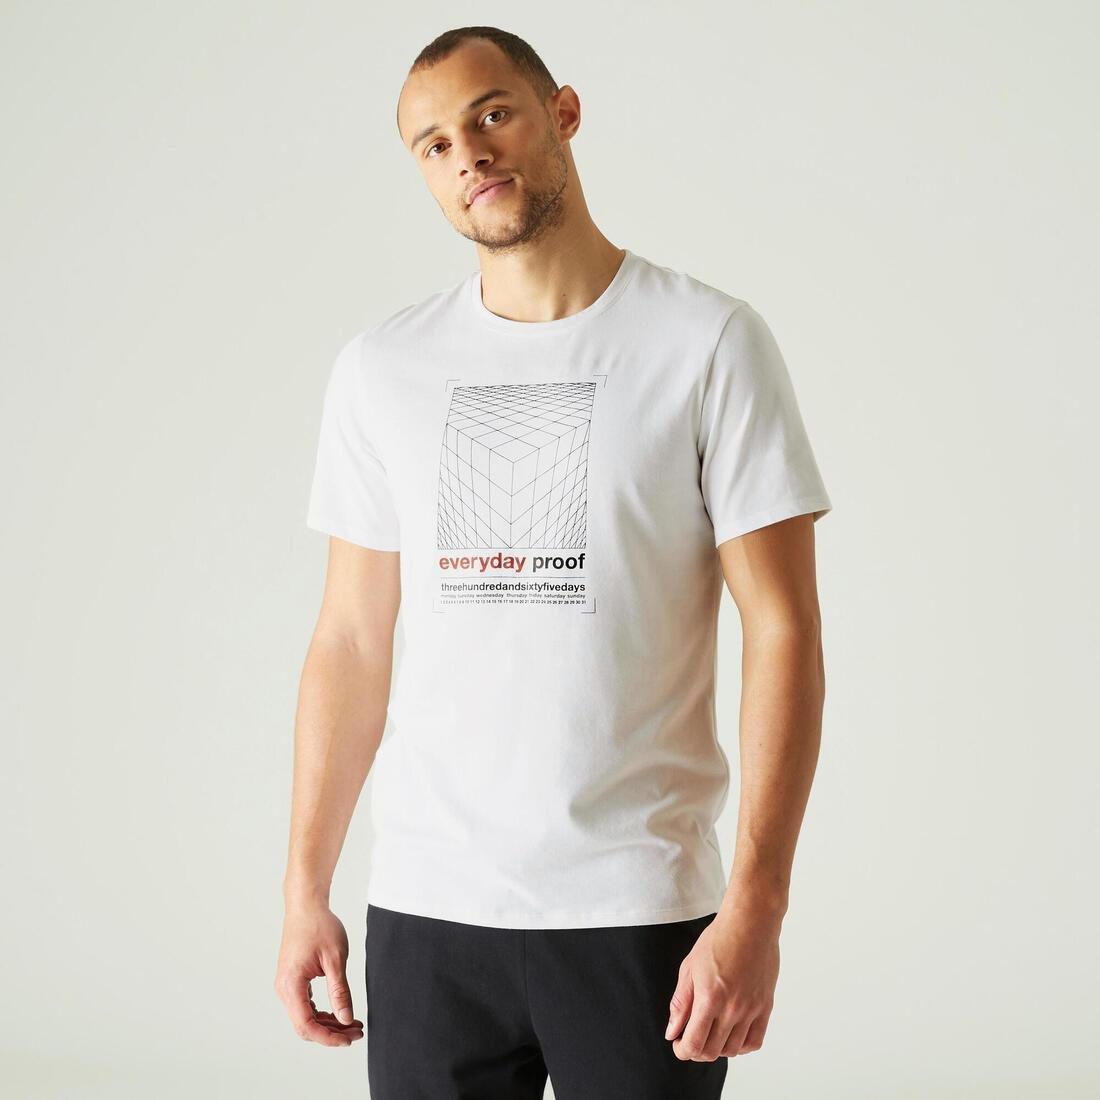 DOMYOS - Stretch Cotton Fitness T-Shirt, White